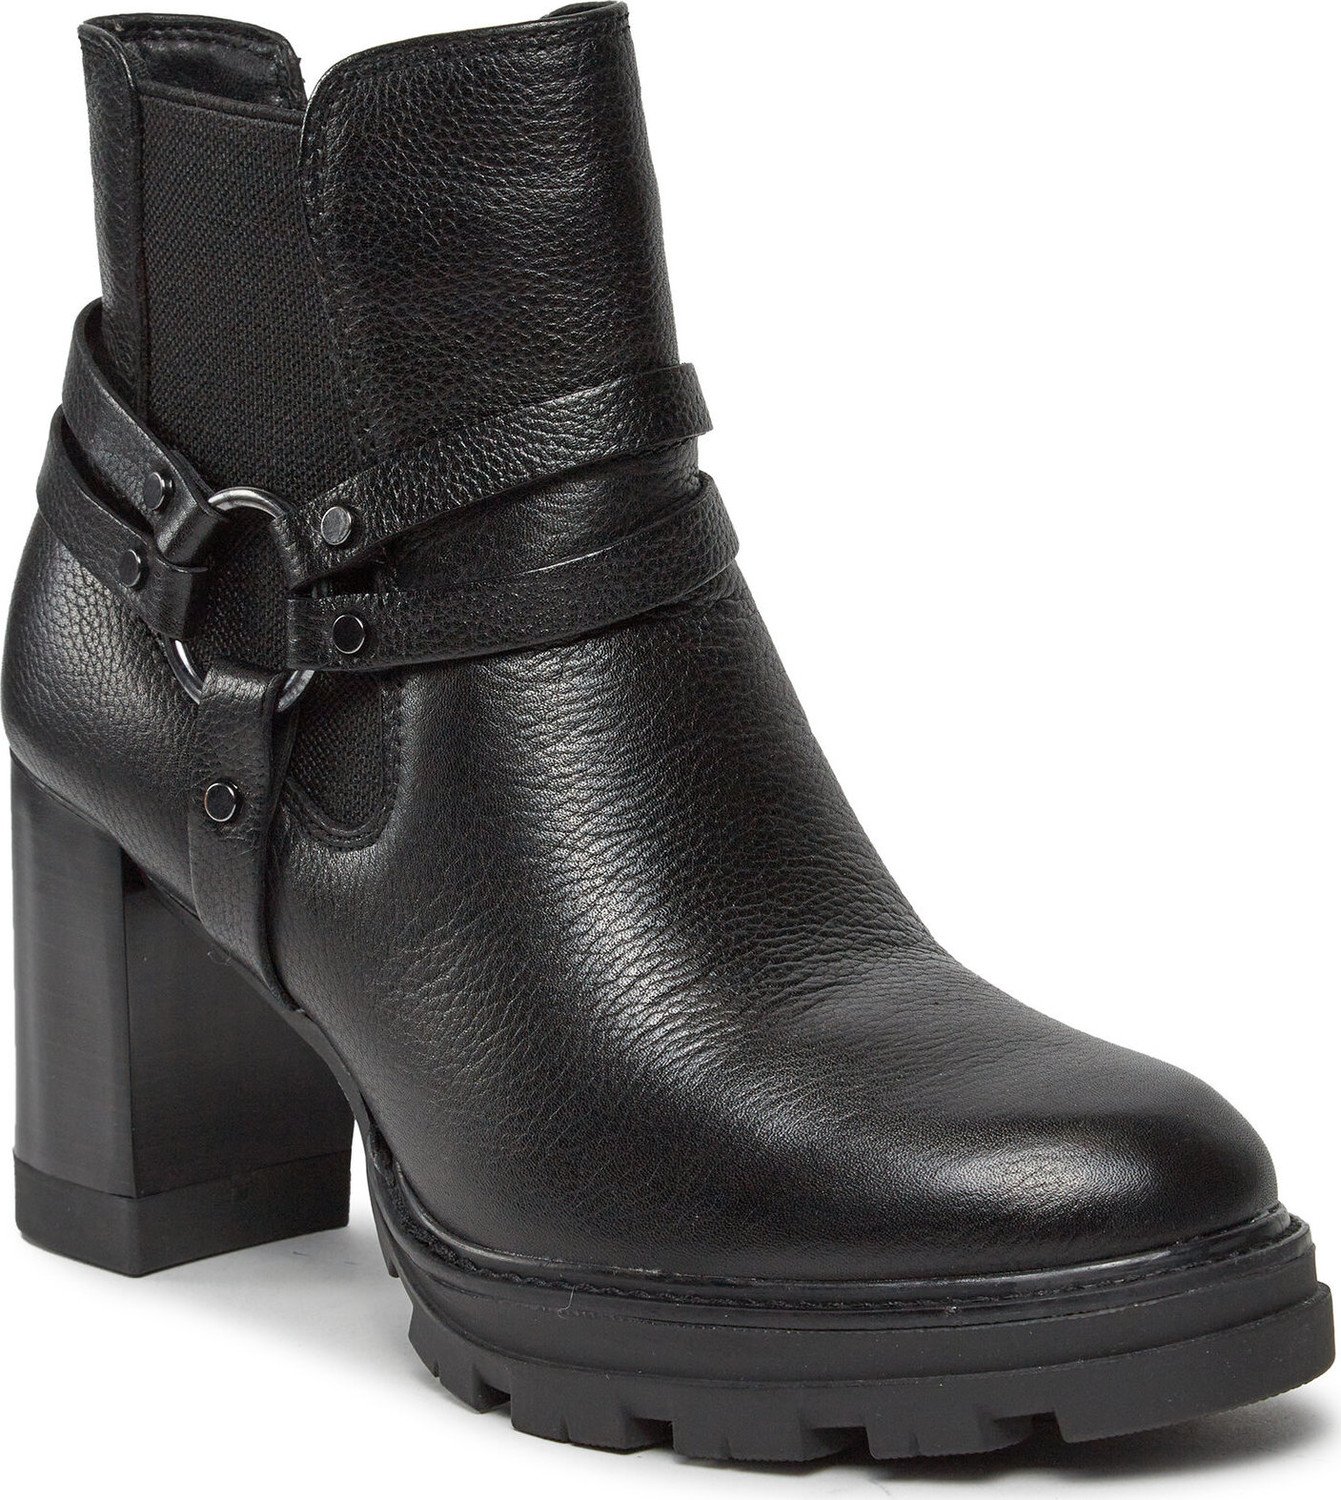 Kotníková obuv s elastickým prvkem Tamaris 1-25046-41 Black Leather 003